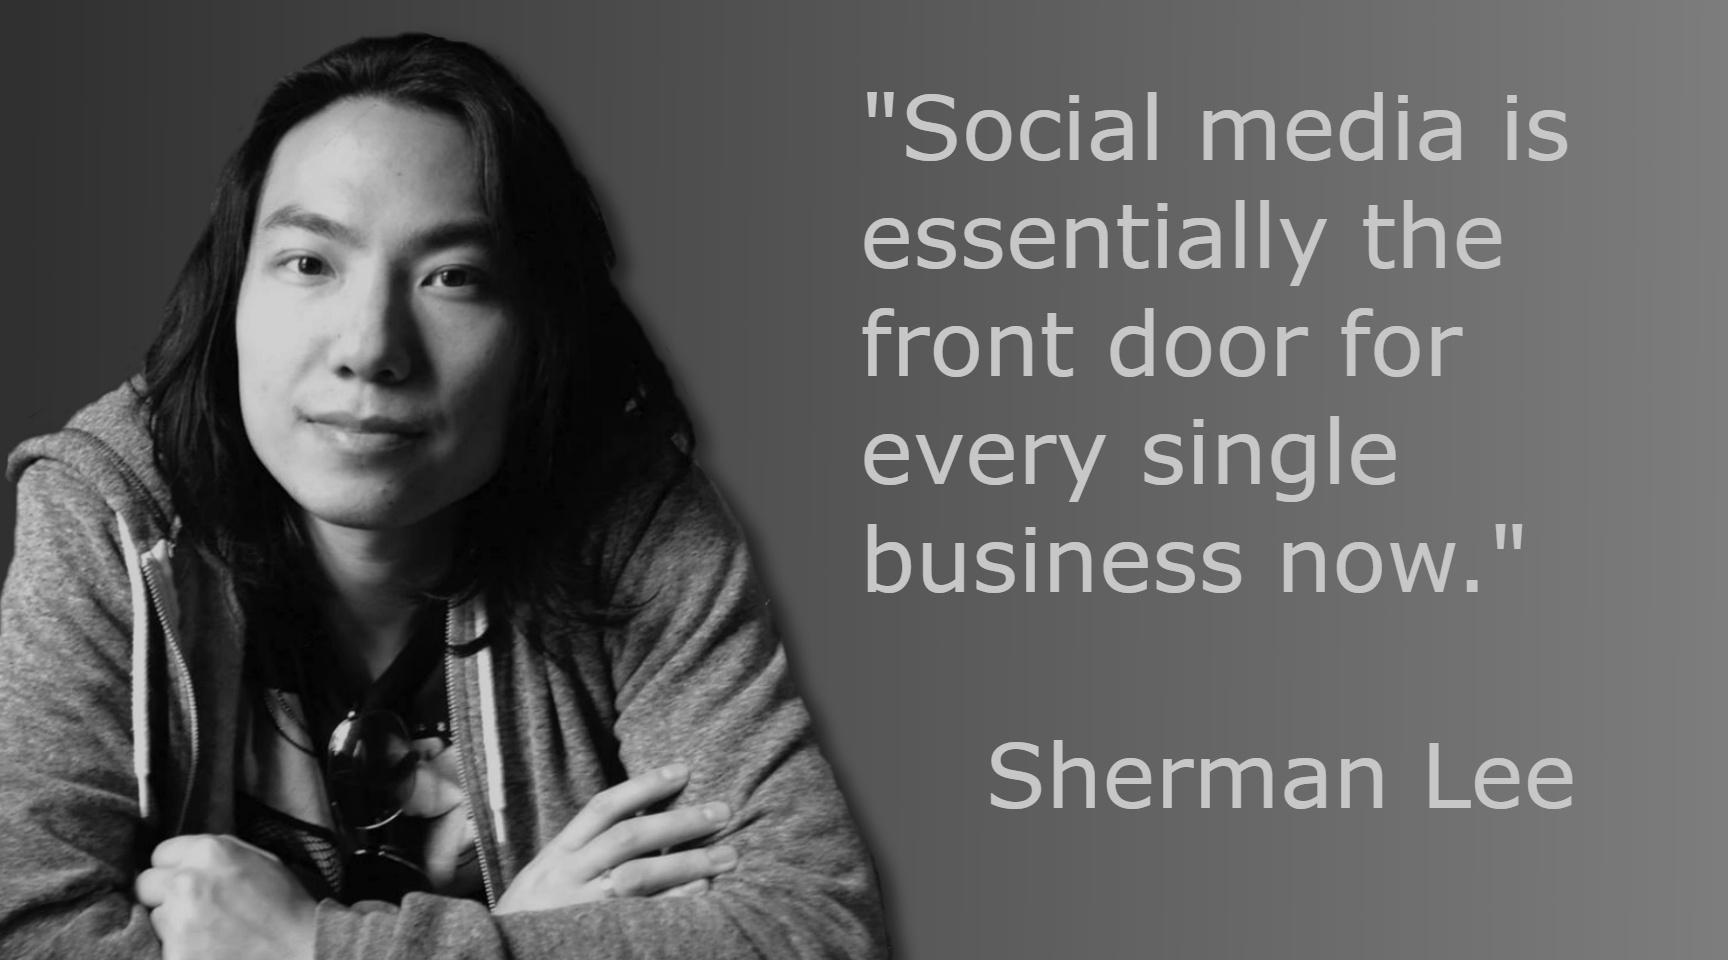 Episode #66 - Sherman Lee on Optimizing Social Media Marketing